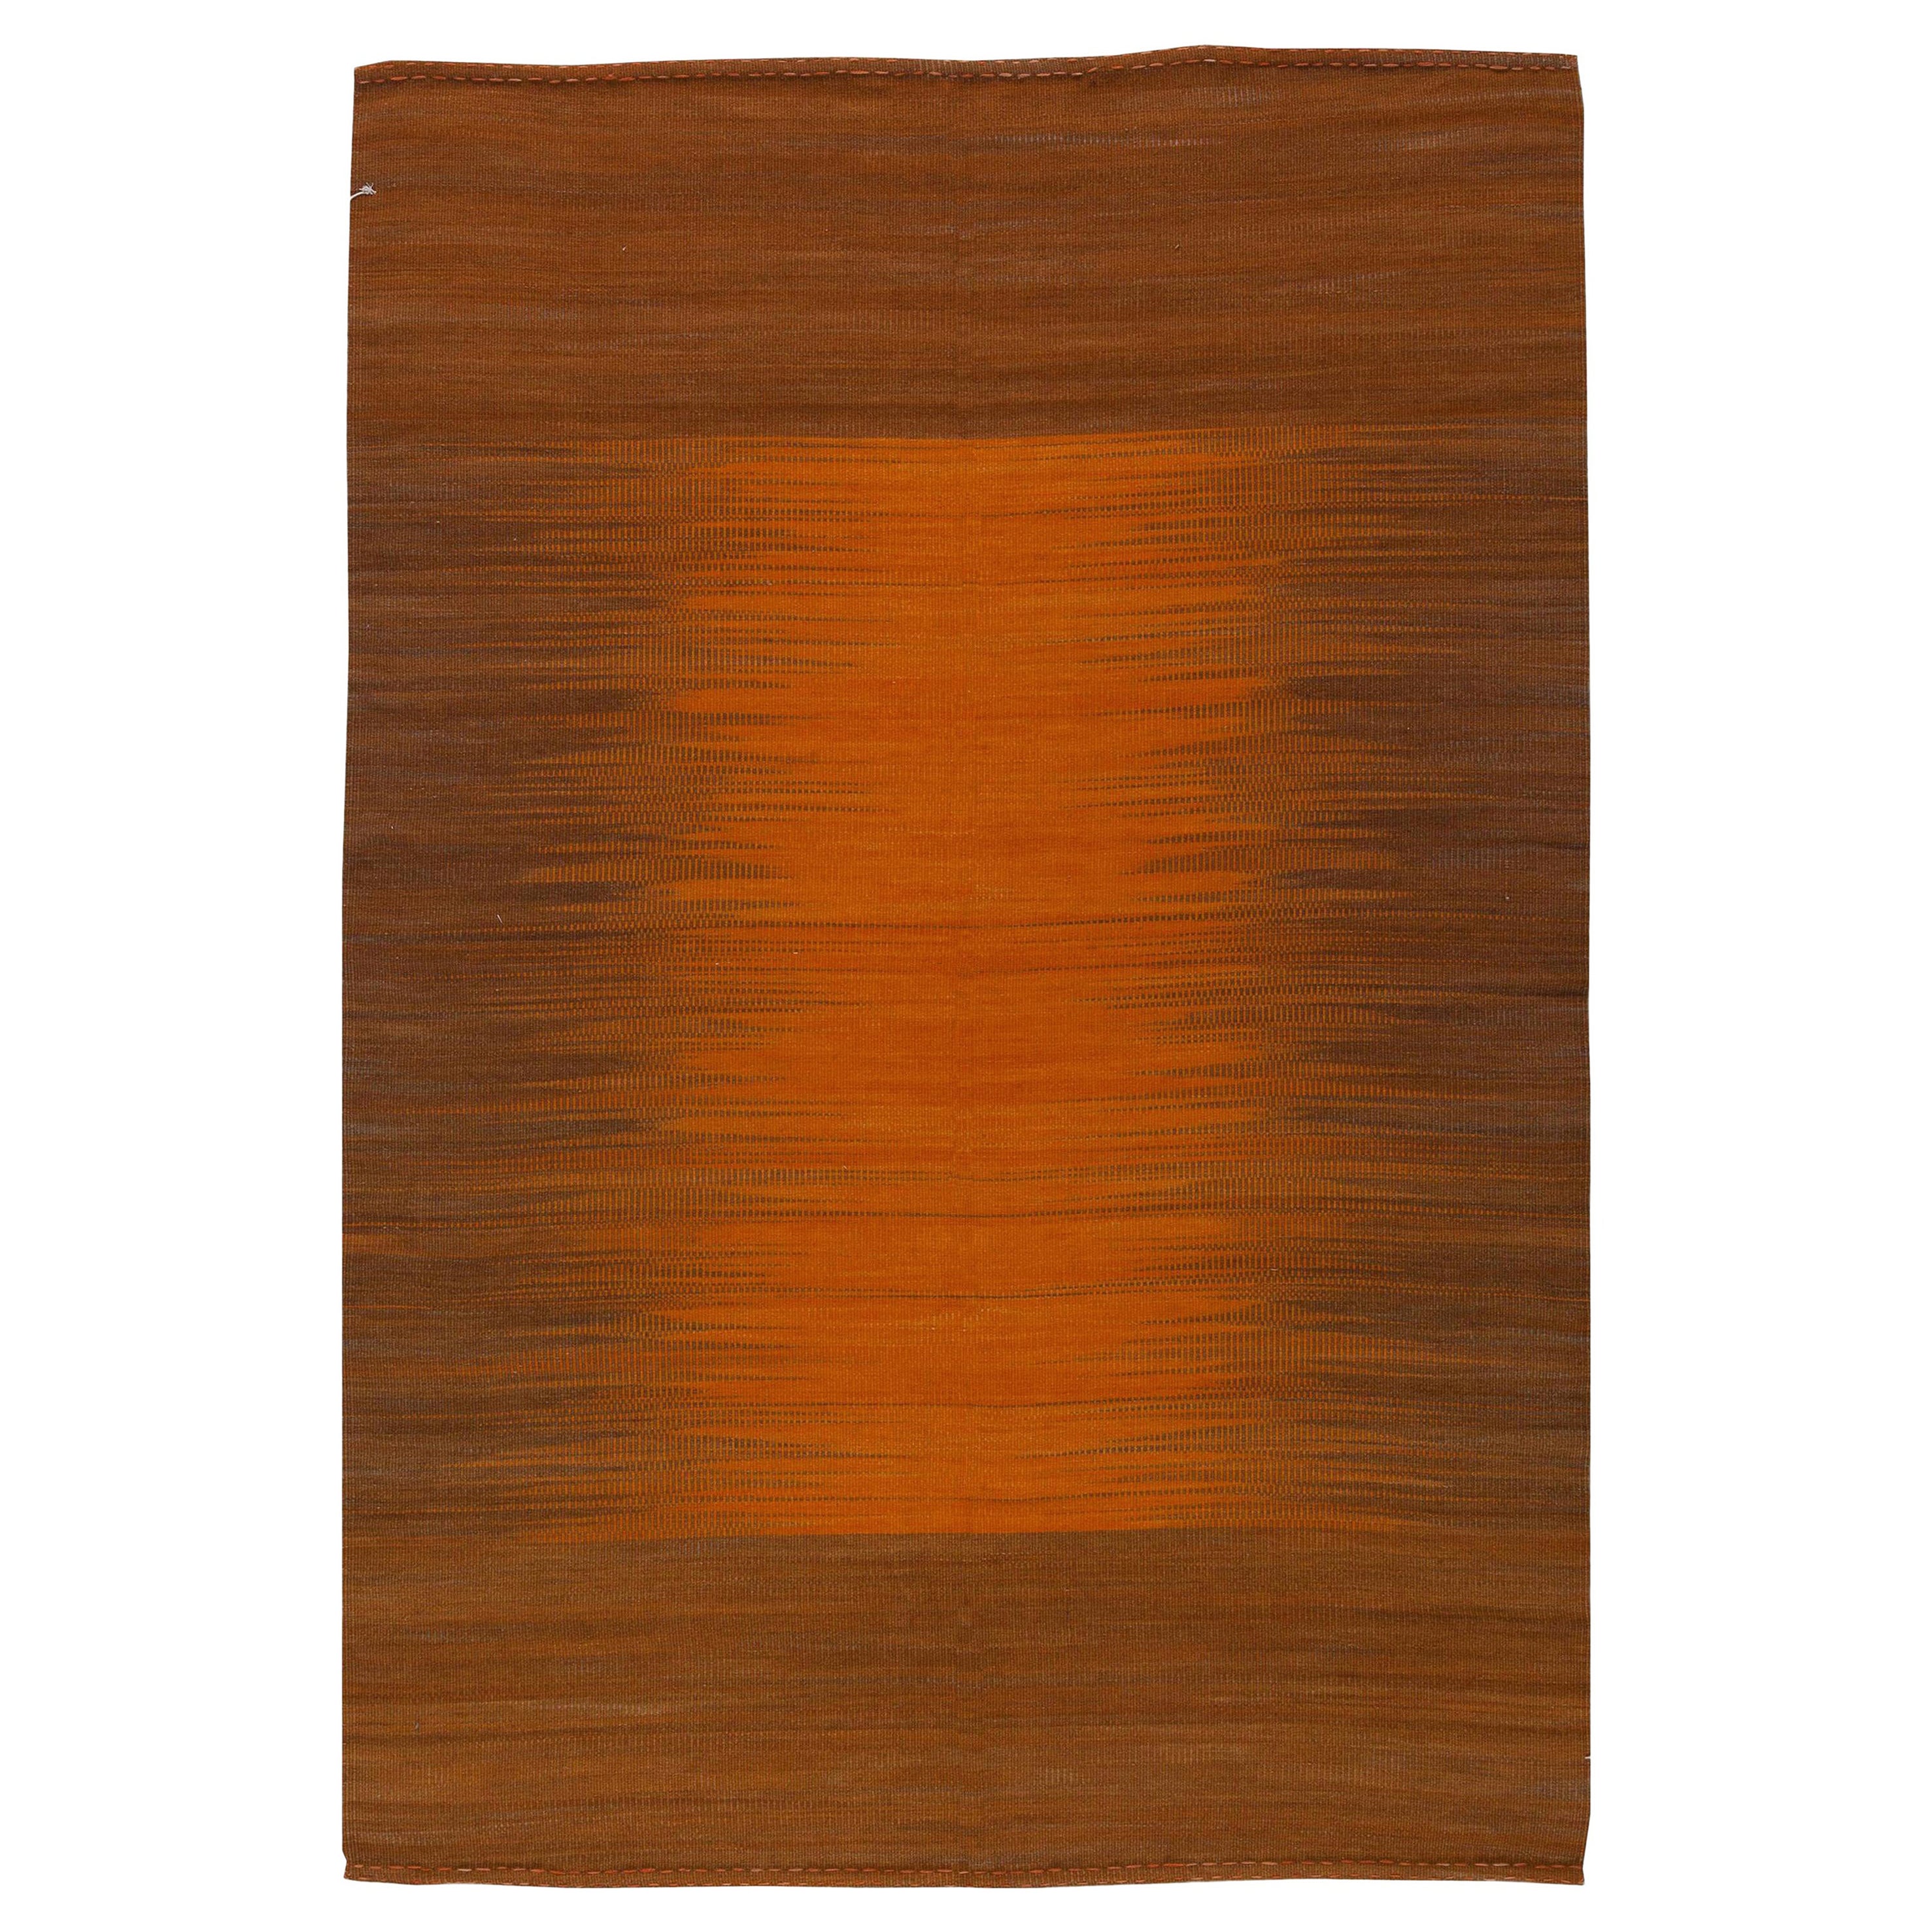 Karatas, Turkish Modern Orange and Brown Kilim Rug by Doris Leslie Blau